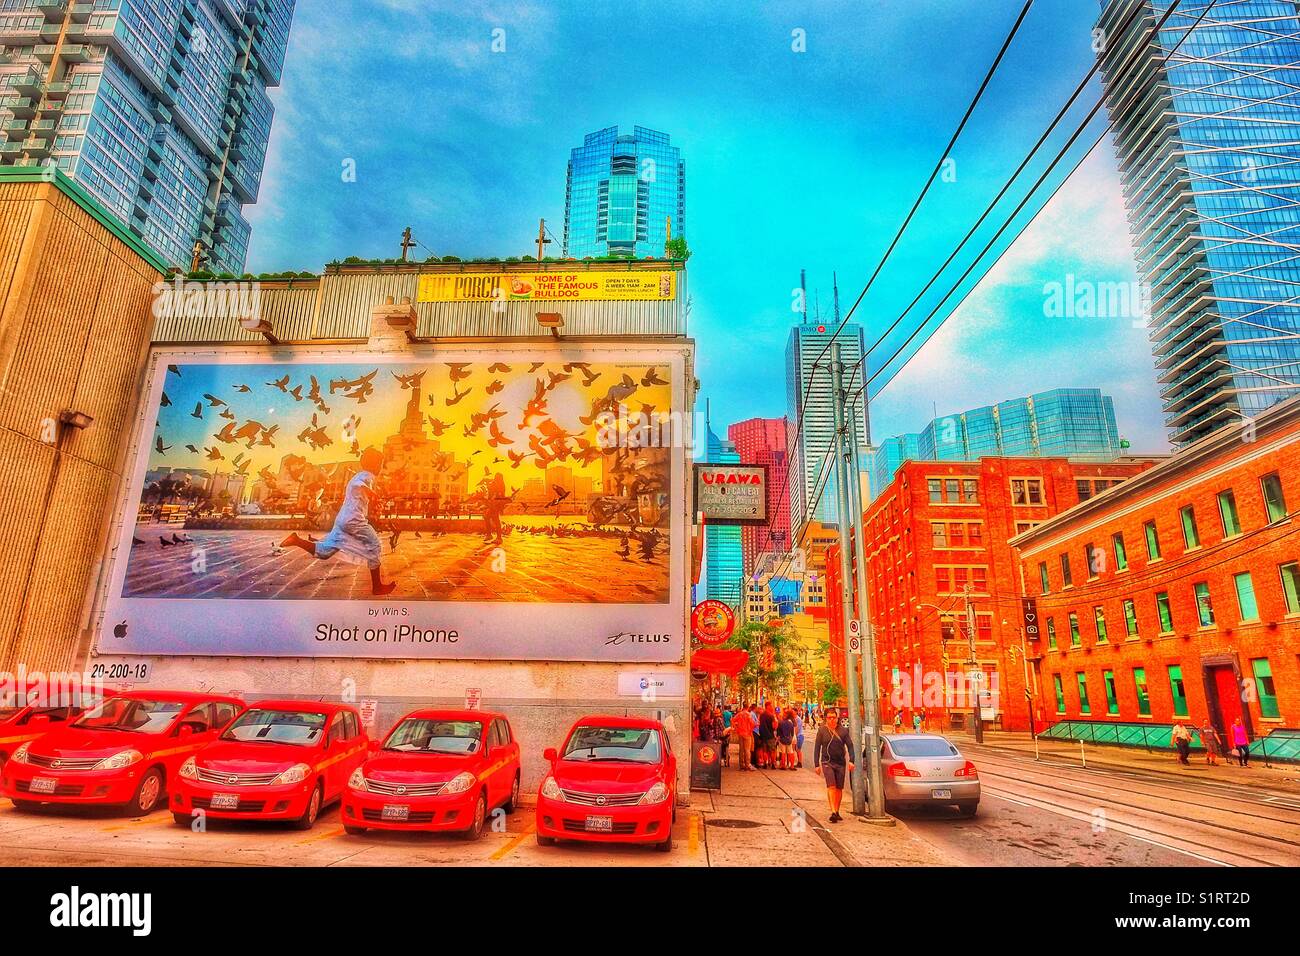 Giant billboard advertising iPhone, Toronto, Ontario, Canada Stock Photo